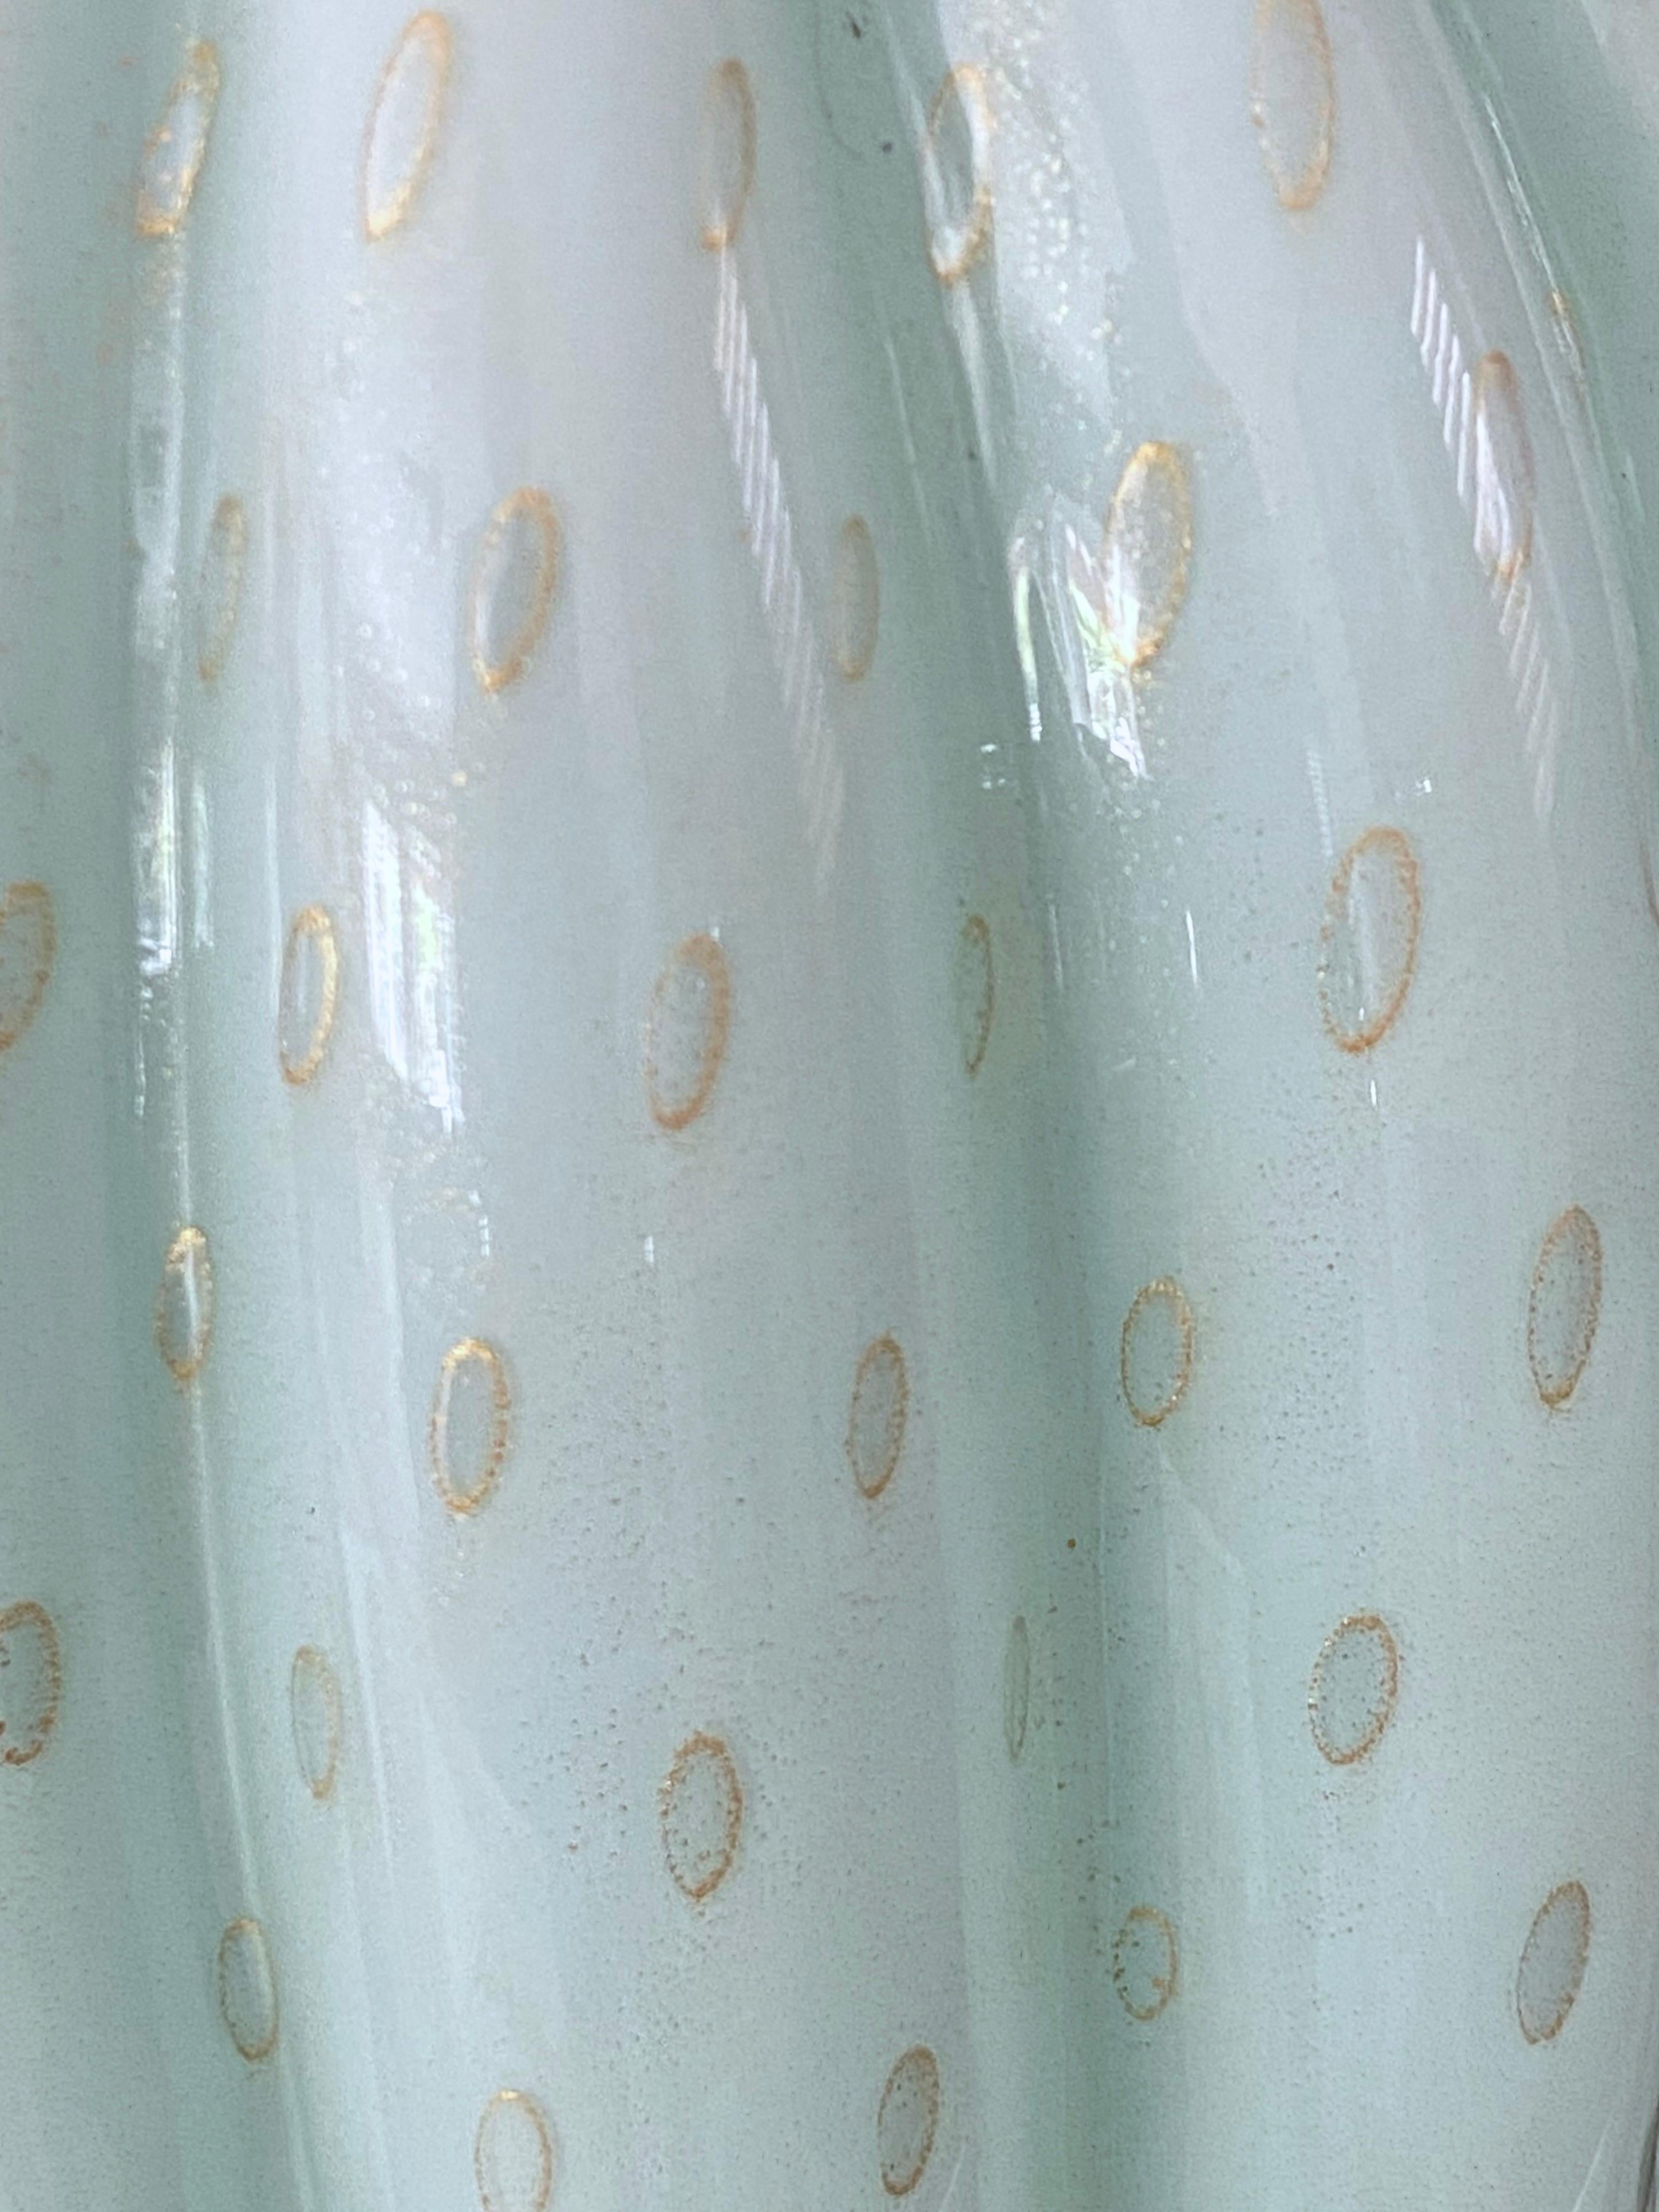 Barbini Murano Seafoam Green Glass Table Lamp For Sale 2